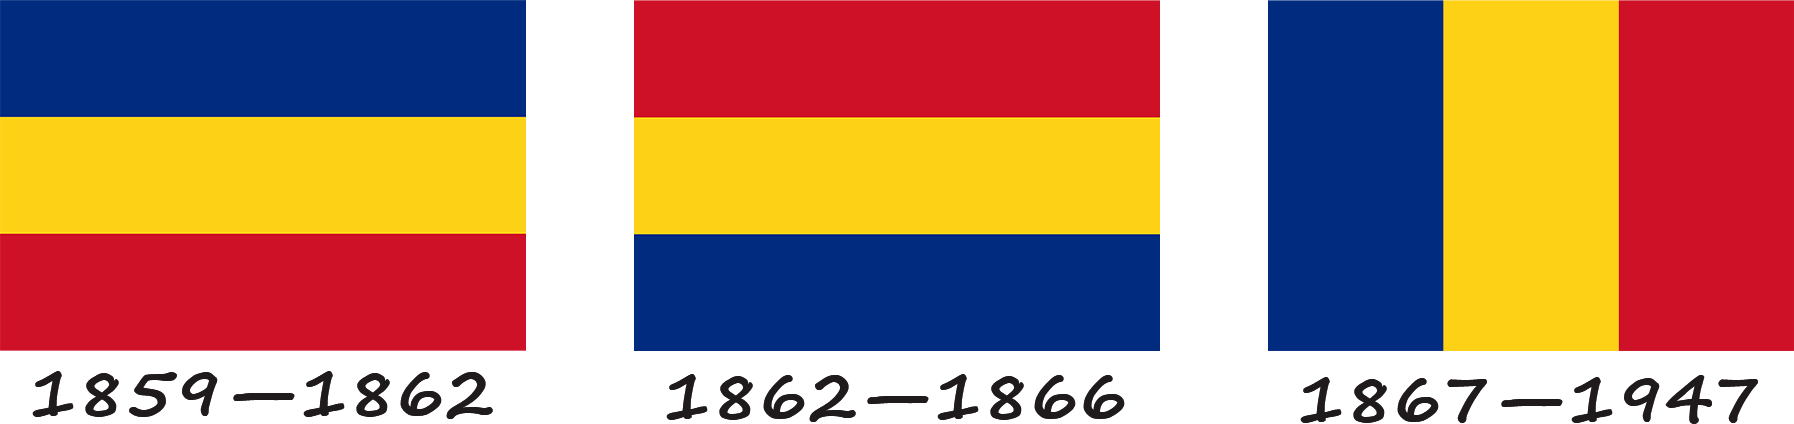 Histoire du drapeau roumain